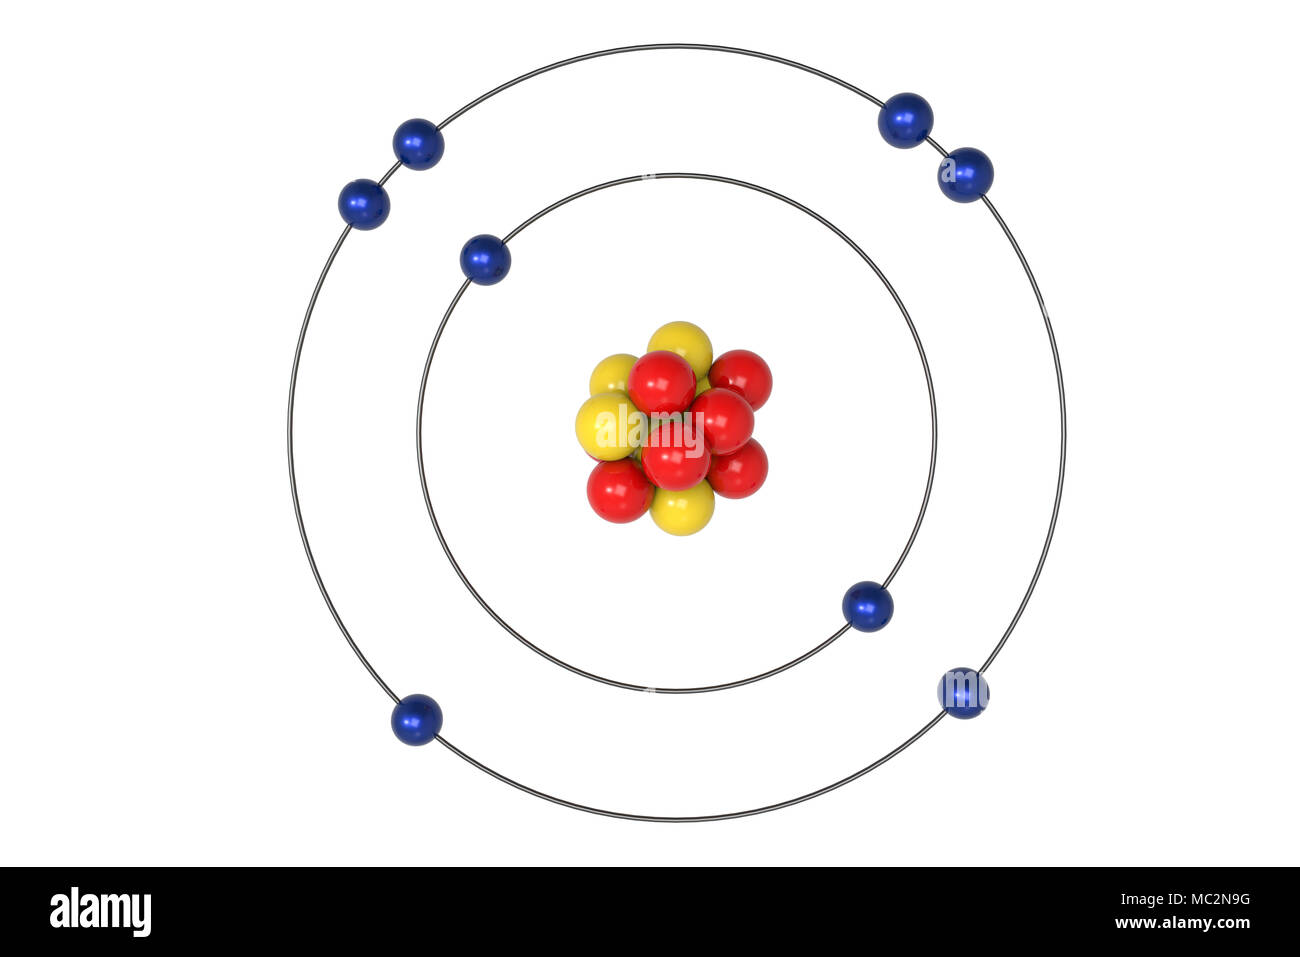 Oxygen Atom Bohr model with proton, neutron and electron. 3d illustration Stock Photo